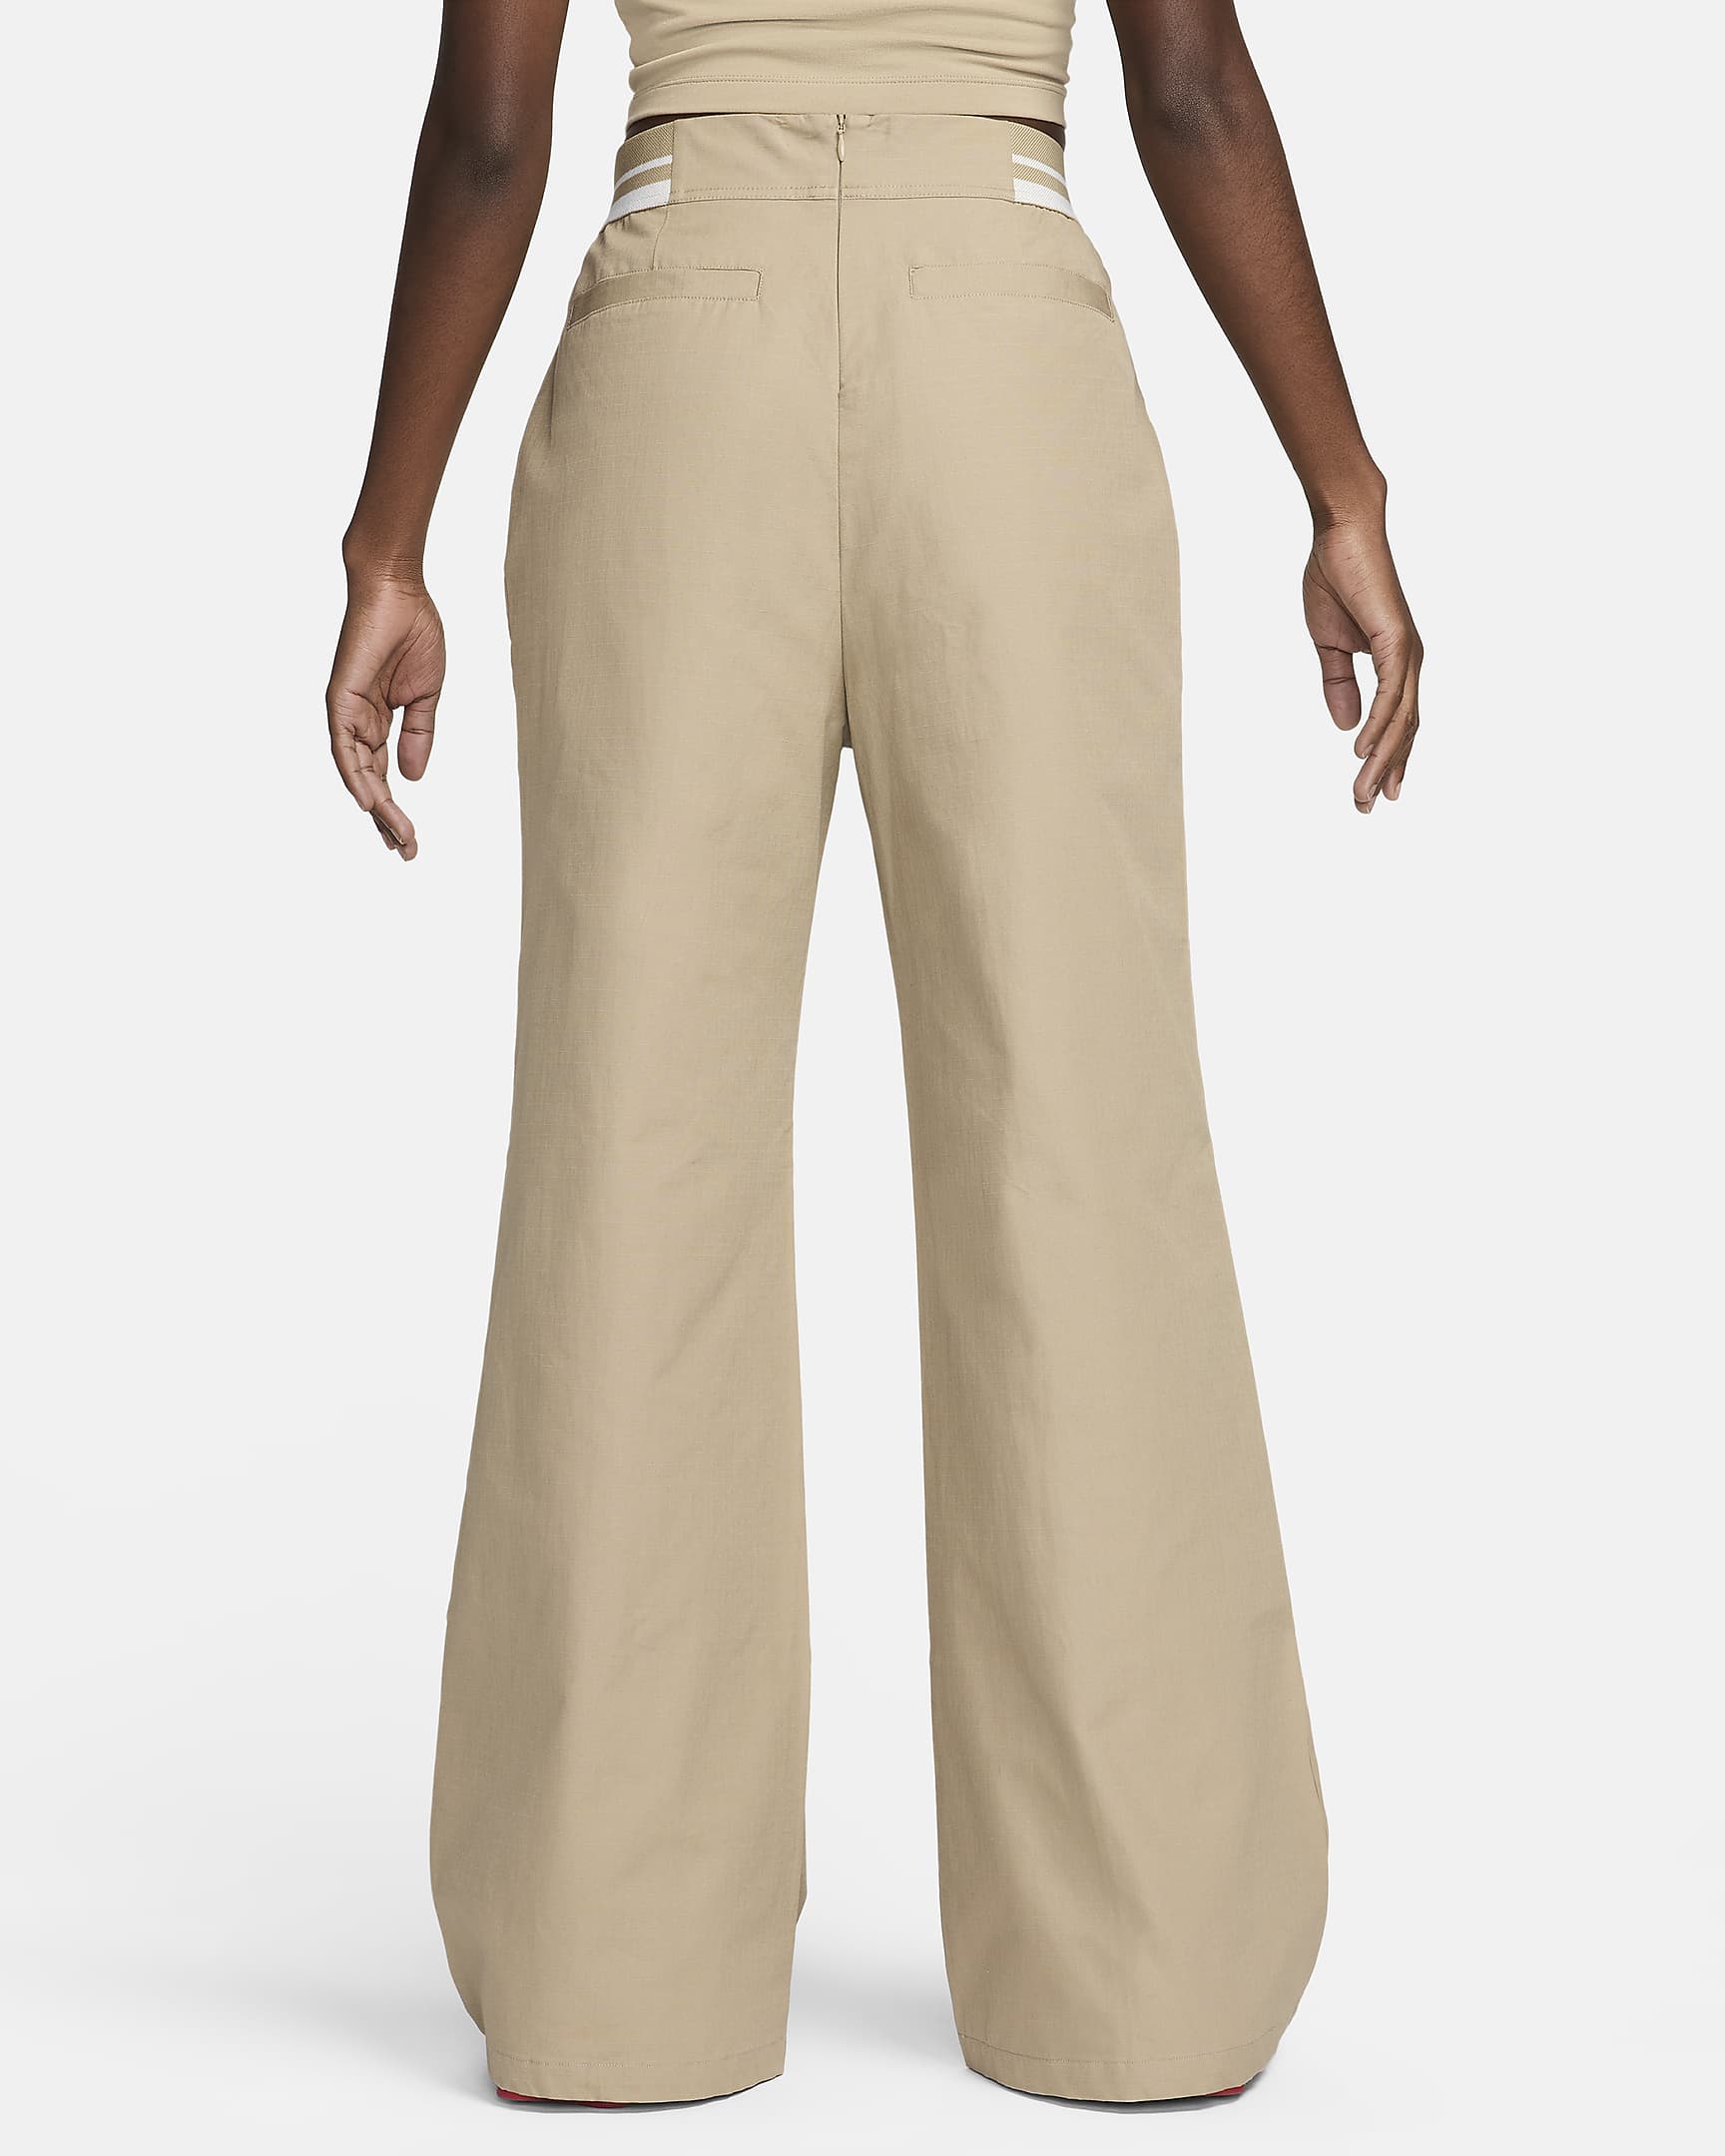 Nike Sportswear Collection Women's High-Waisted Pants - Khaki/Sail